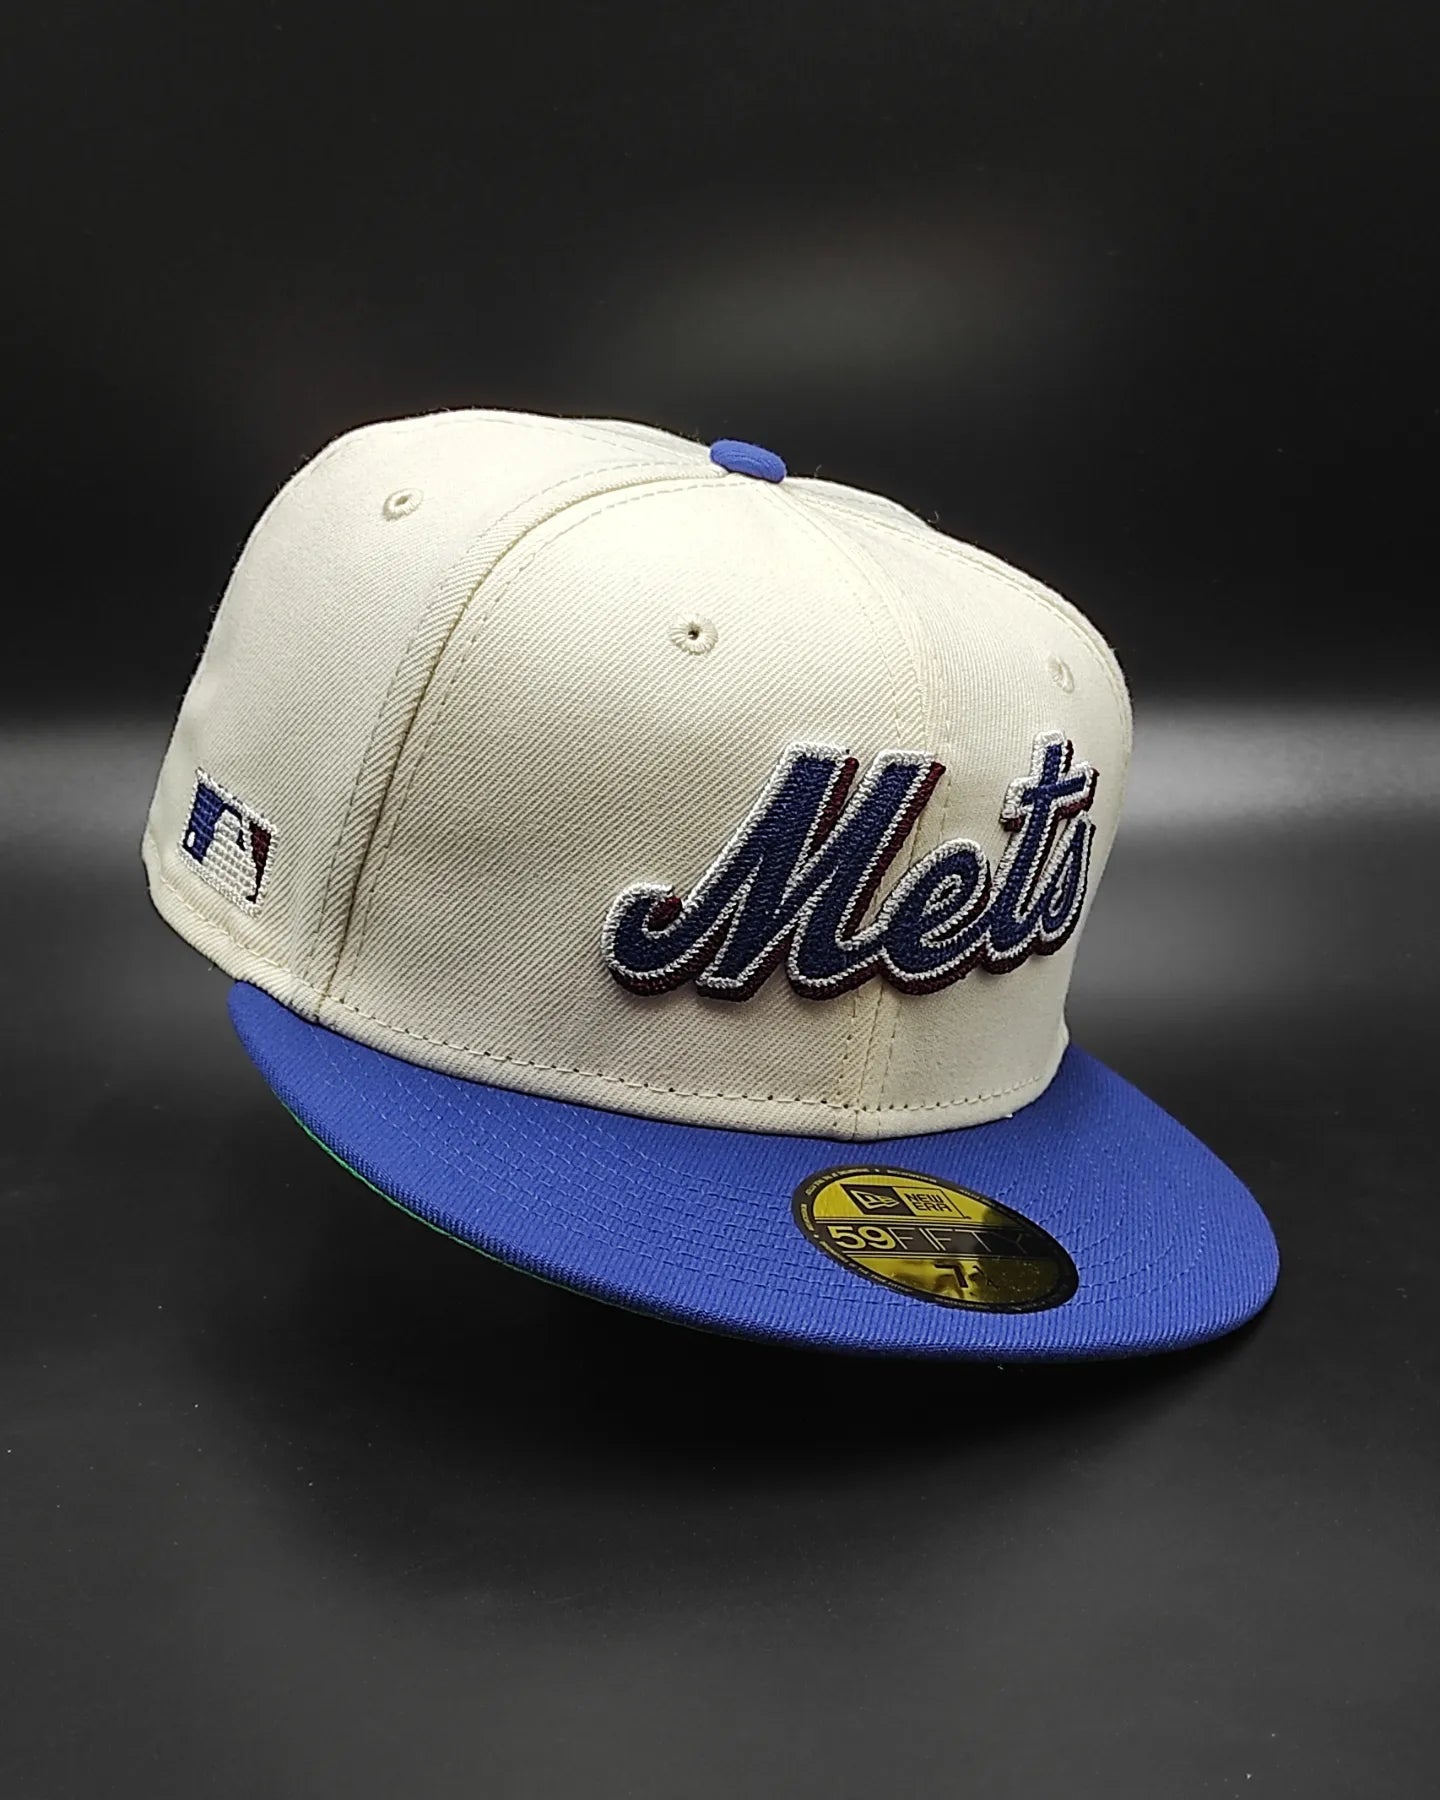 New Era 59 FIFTY Chaín stitch New York Mets - white - royal